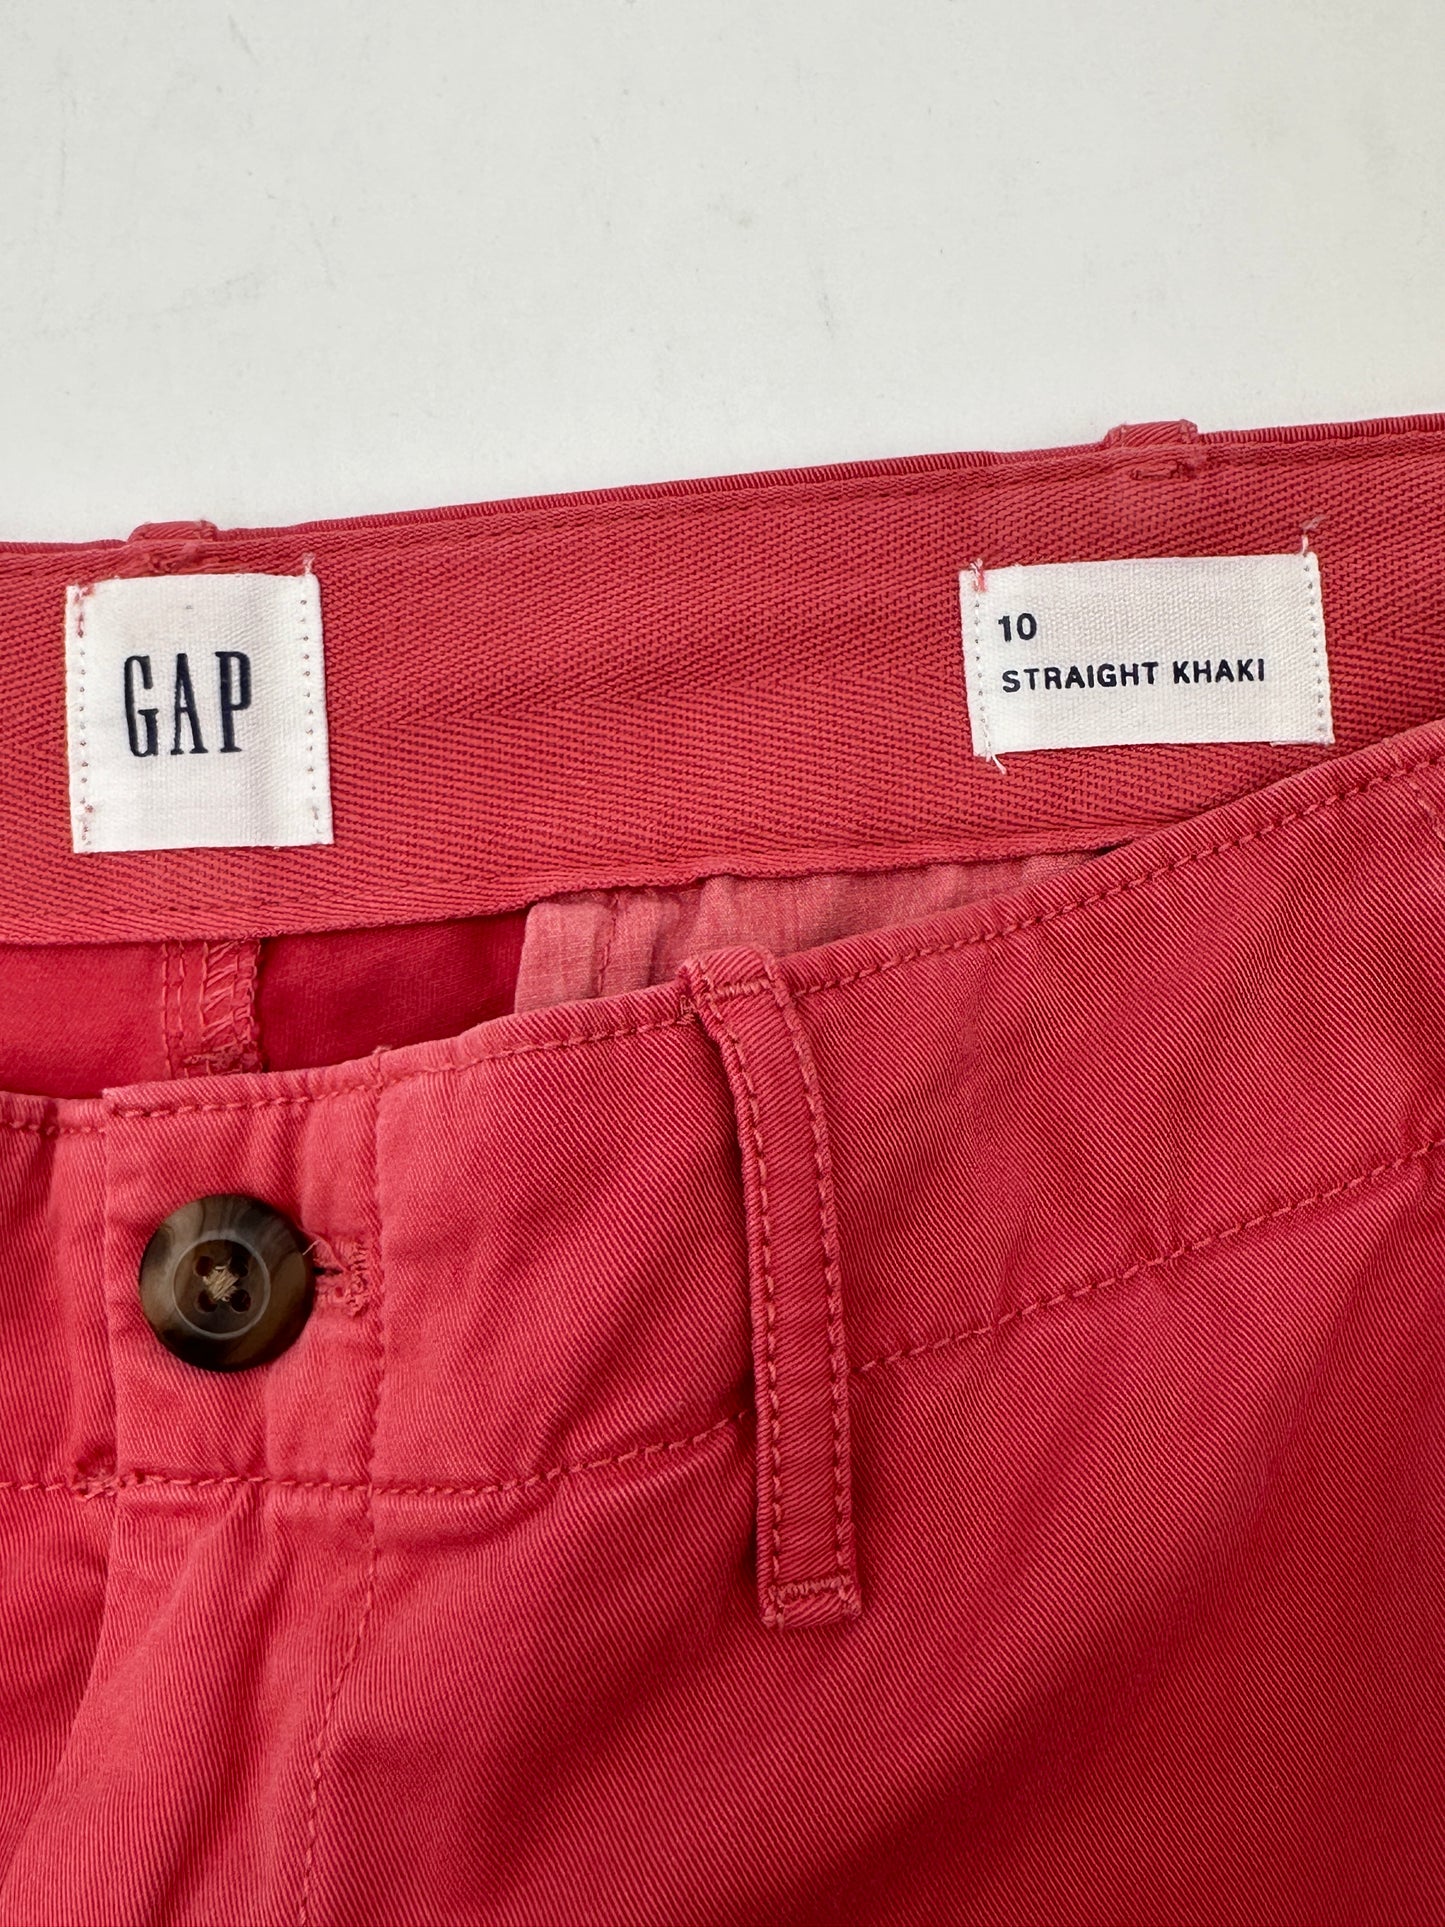 Gap Size 10 Salmon Straight Khaki Pants